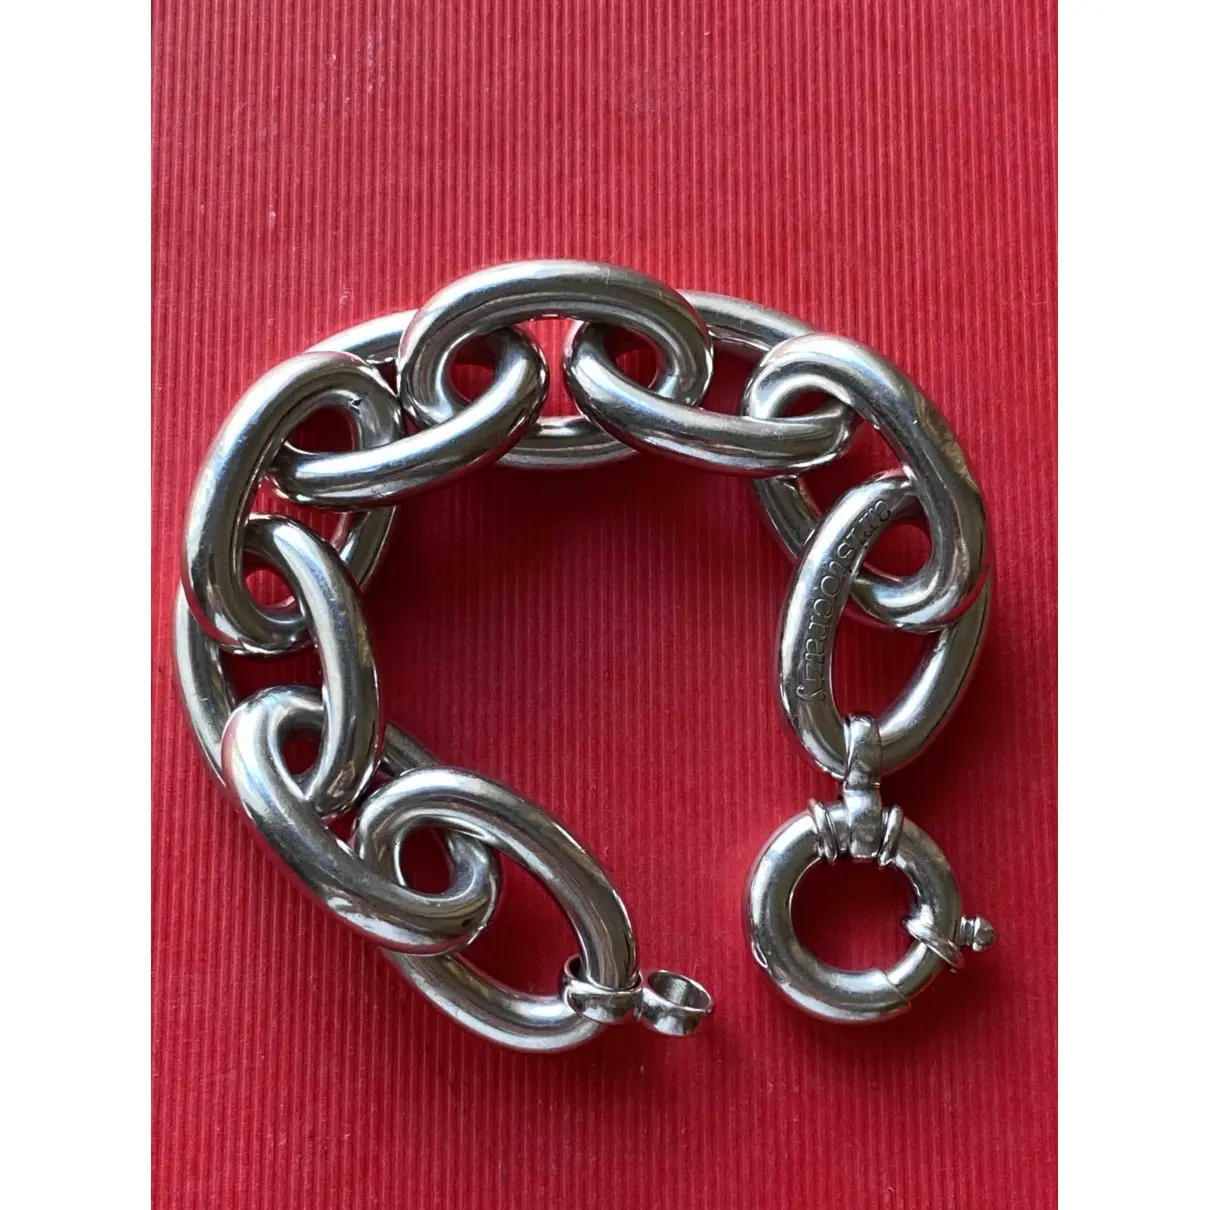 Buy Aristocrazy Silver jewellery set online